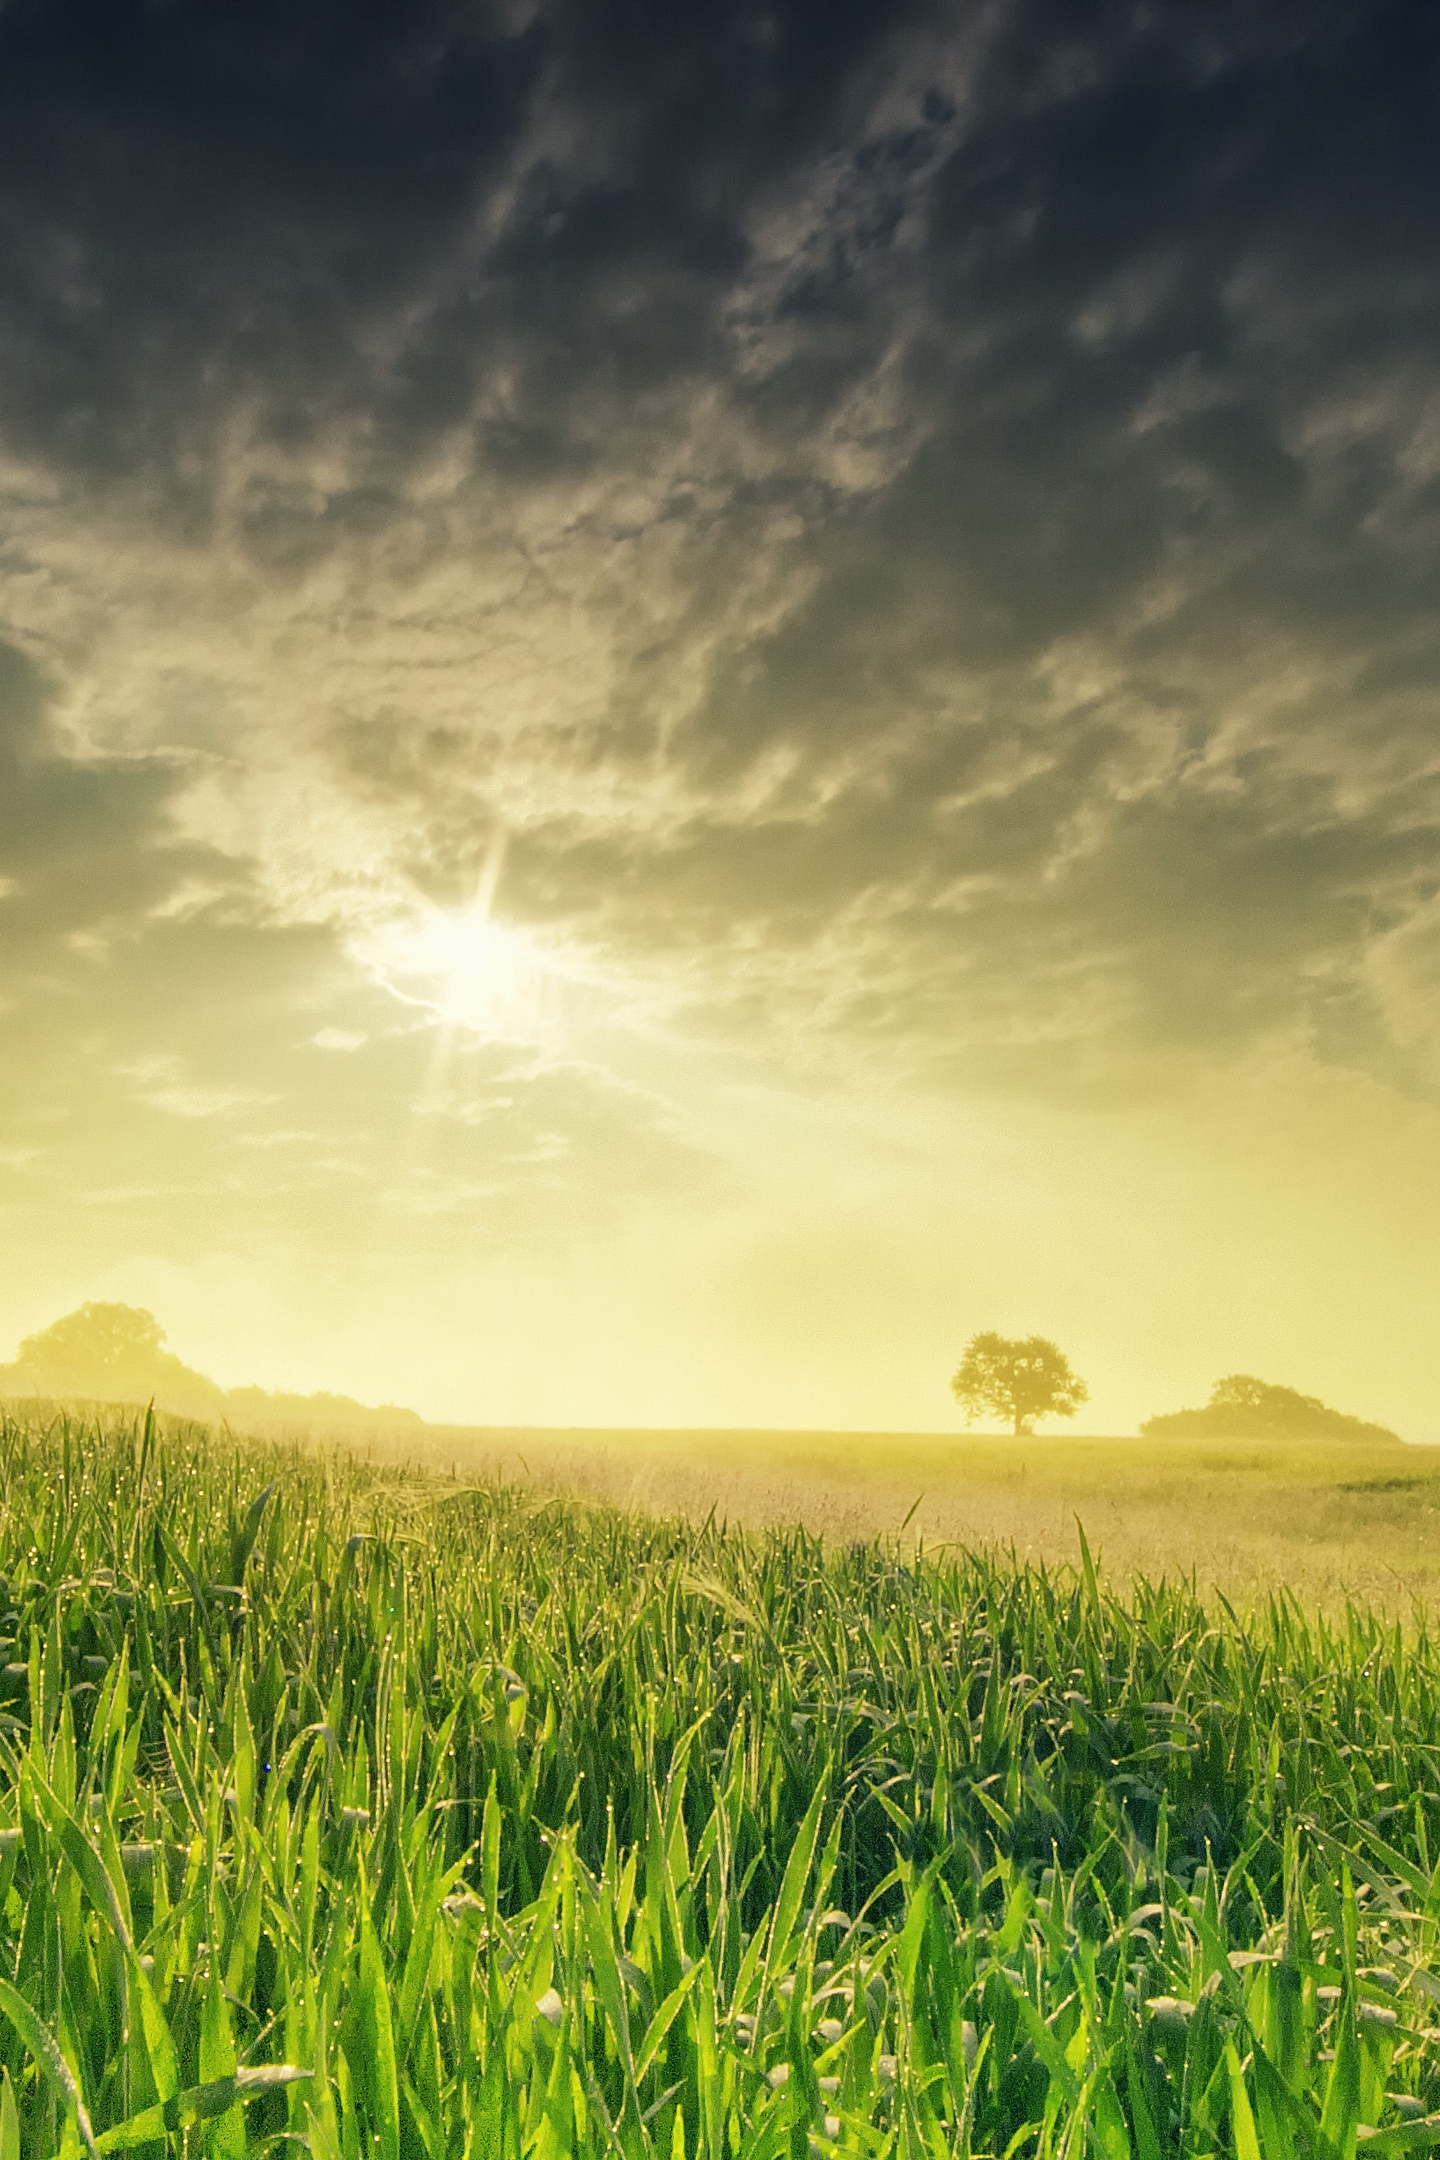 Картинка: Пейзаж, поле, трава, солнце, закат, небо, облака